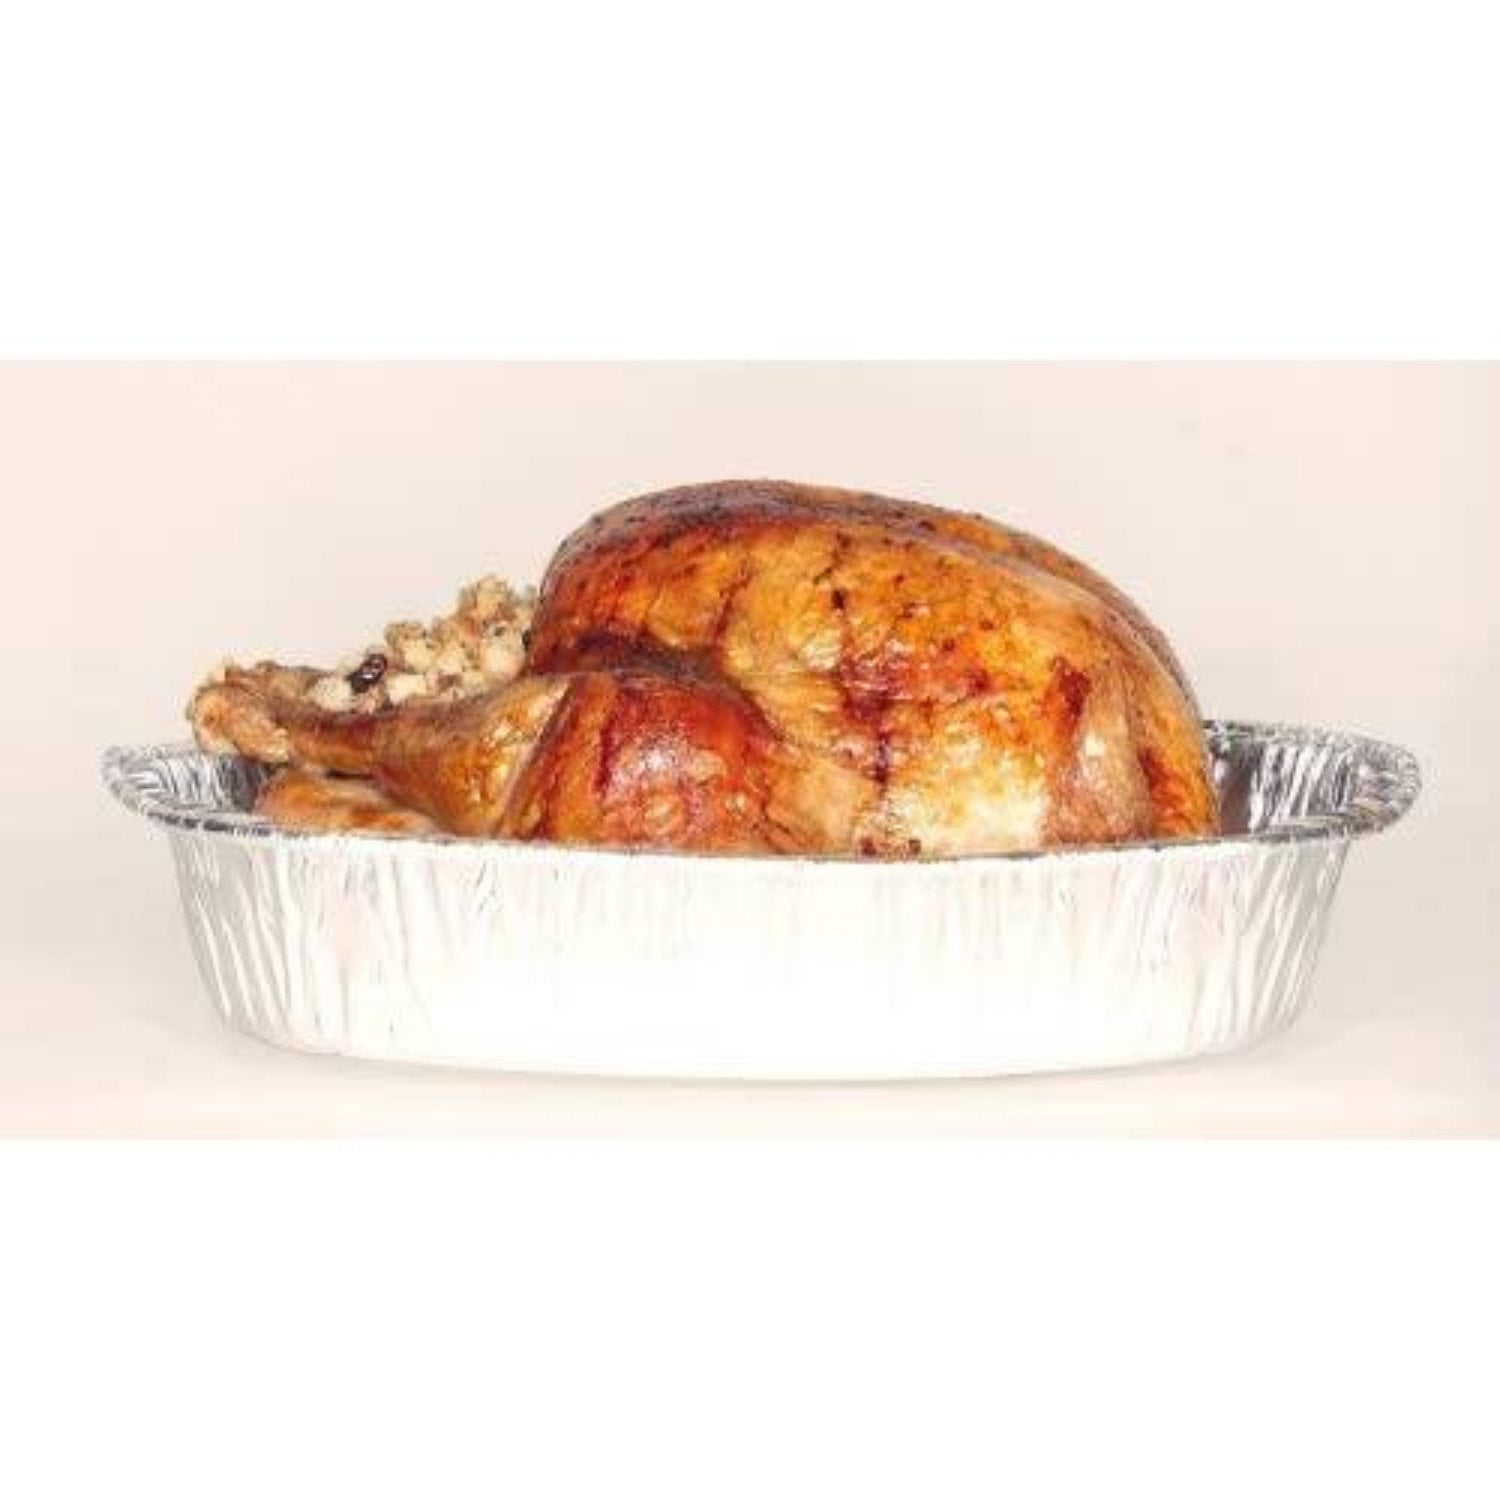 Nicole Fantini Extra Large Heavyduty Disposable Durable Turkey Roaster  Aluminum Pans, Oval Shape for Chicken, Meat, Brisket, Roasting, Baking